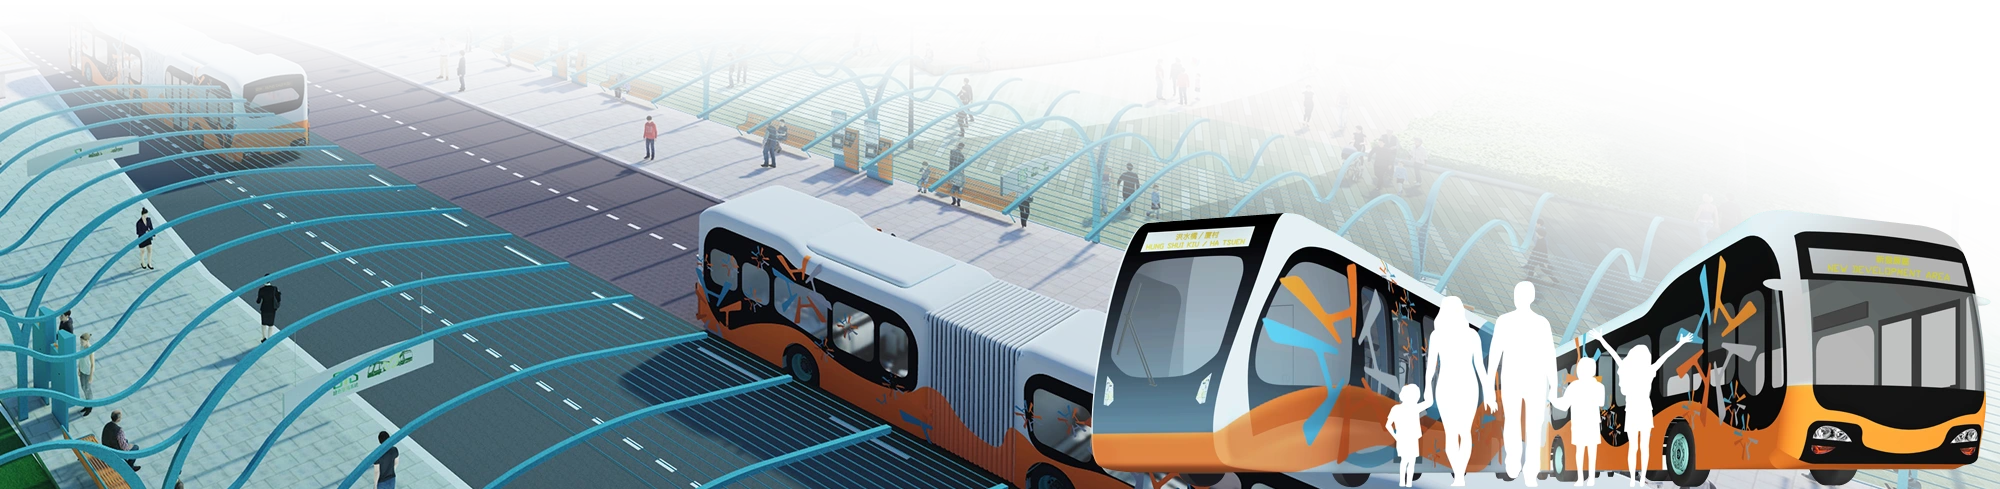 Hung Shui Kiu/Ha Tsuen New Development Area - Green Transit System (GTS)